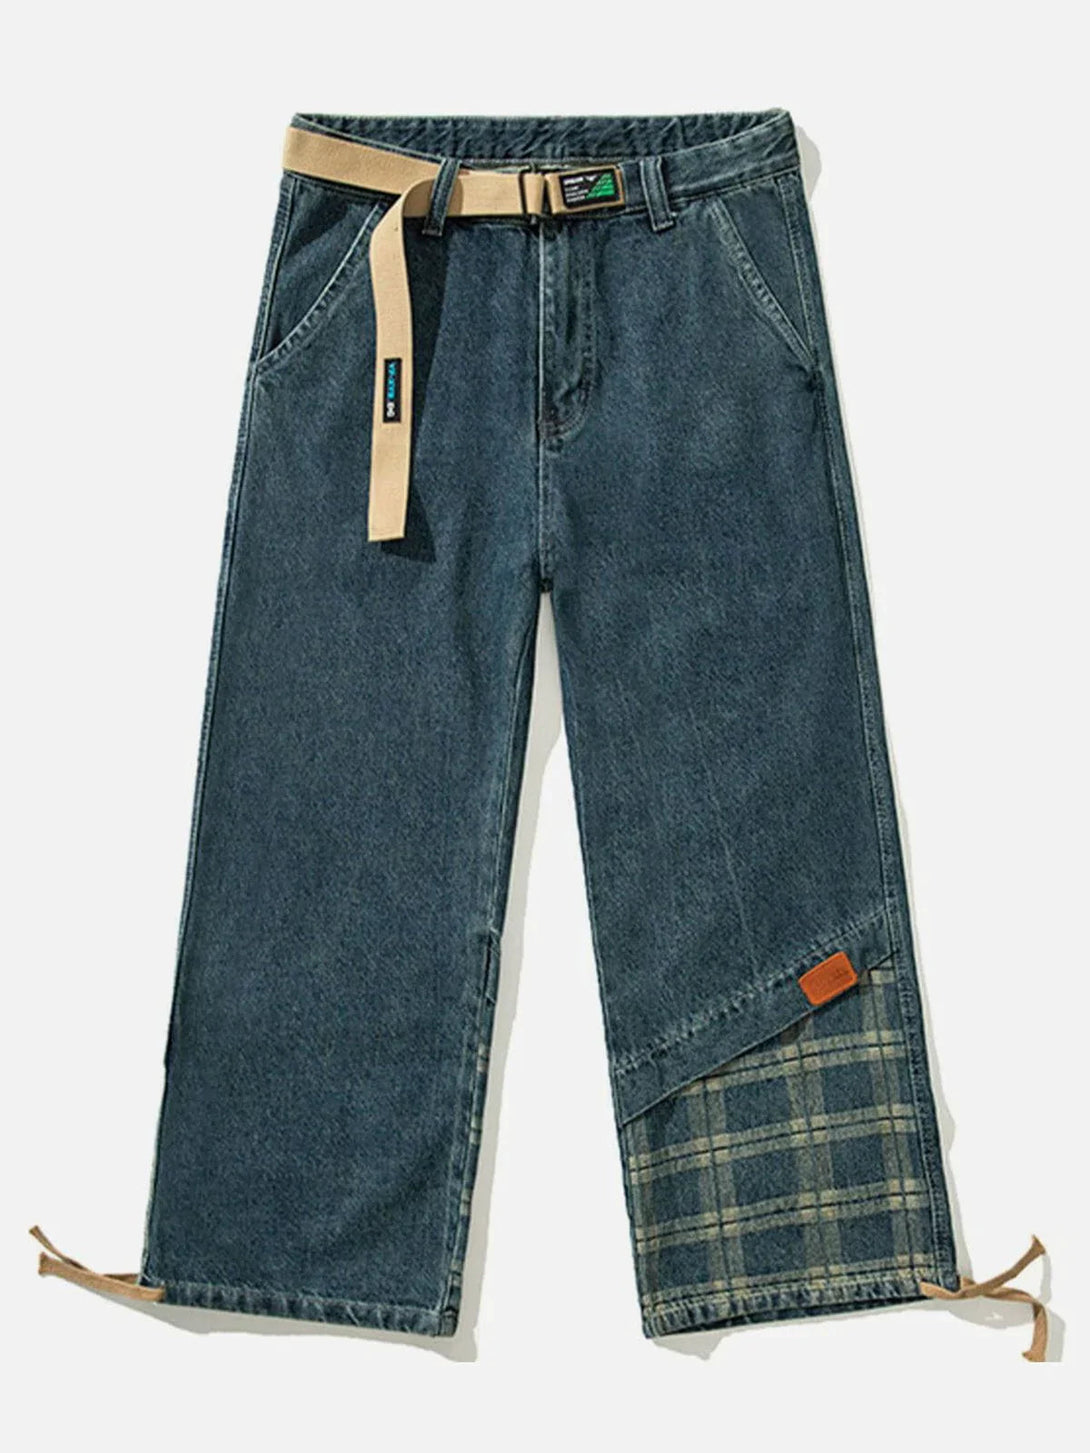 Majesda® - Panelled Plaid Belt Embellished Jeans outfit ideas streetwear fashion